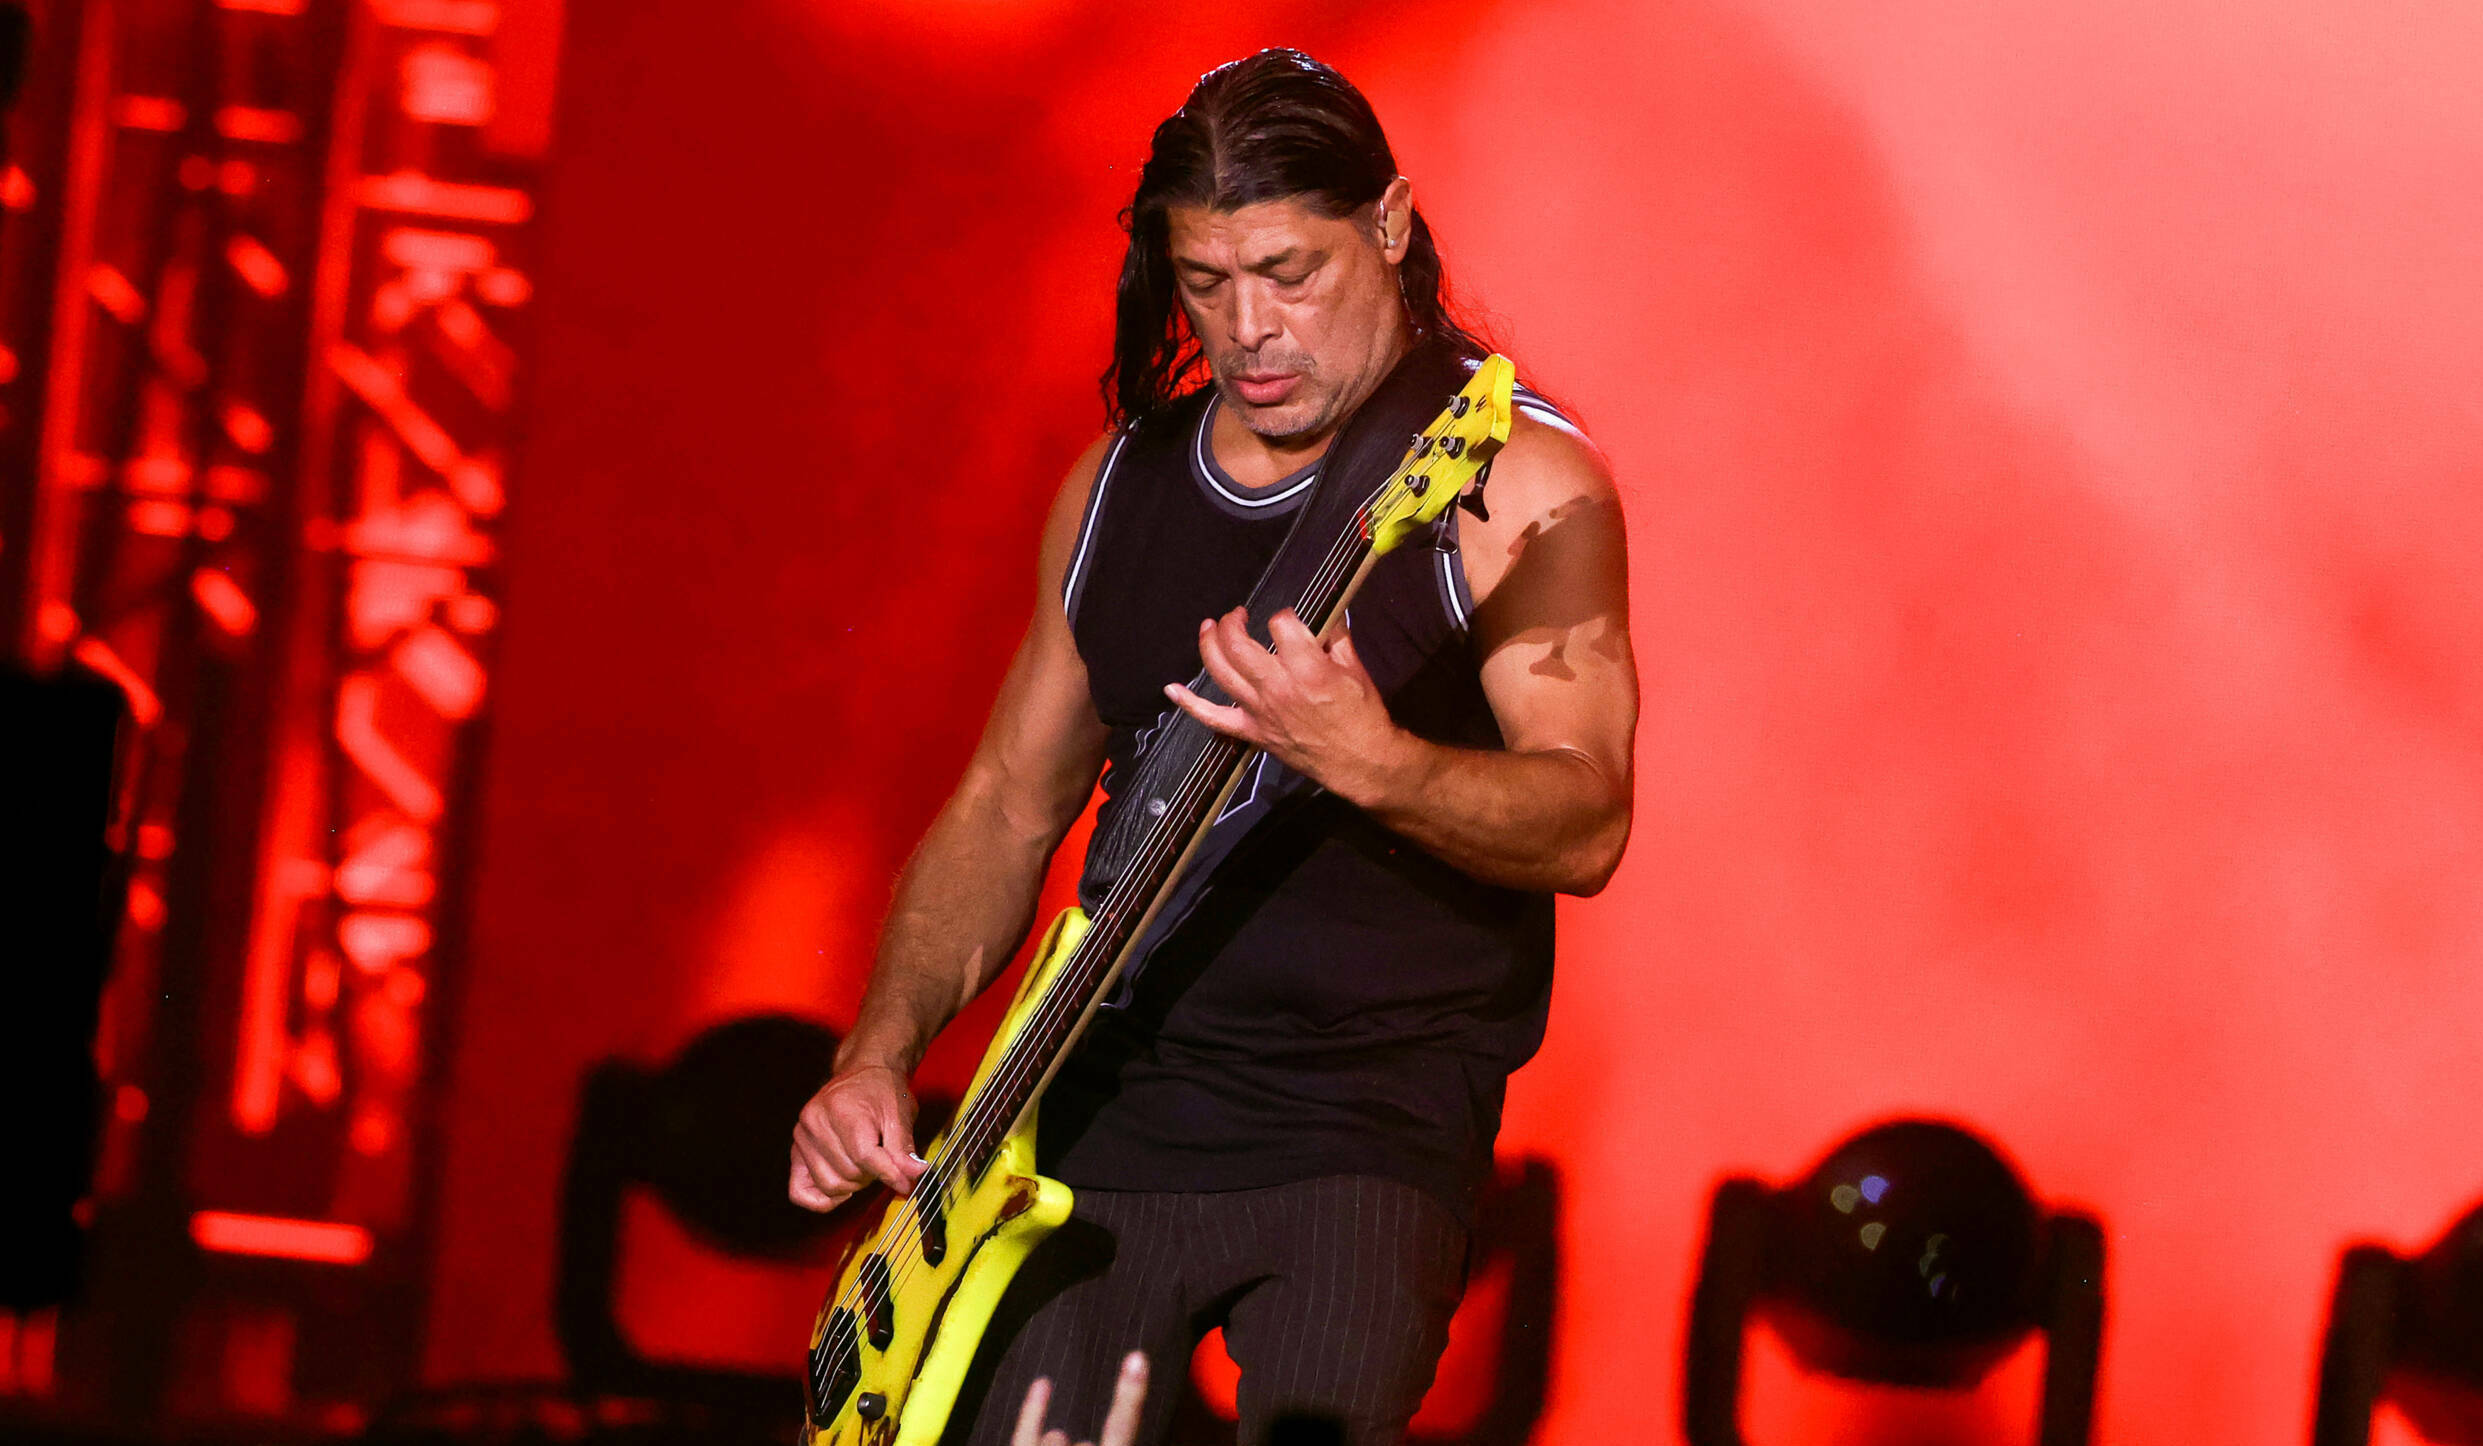 Robert Trujillo von Metallica